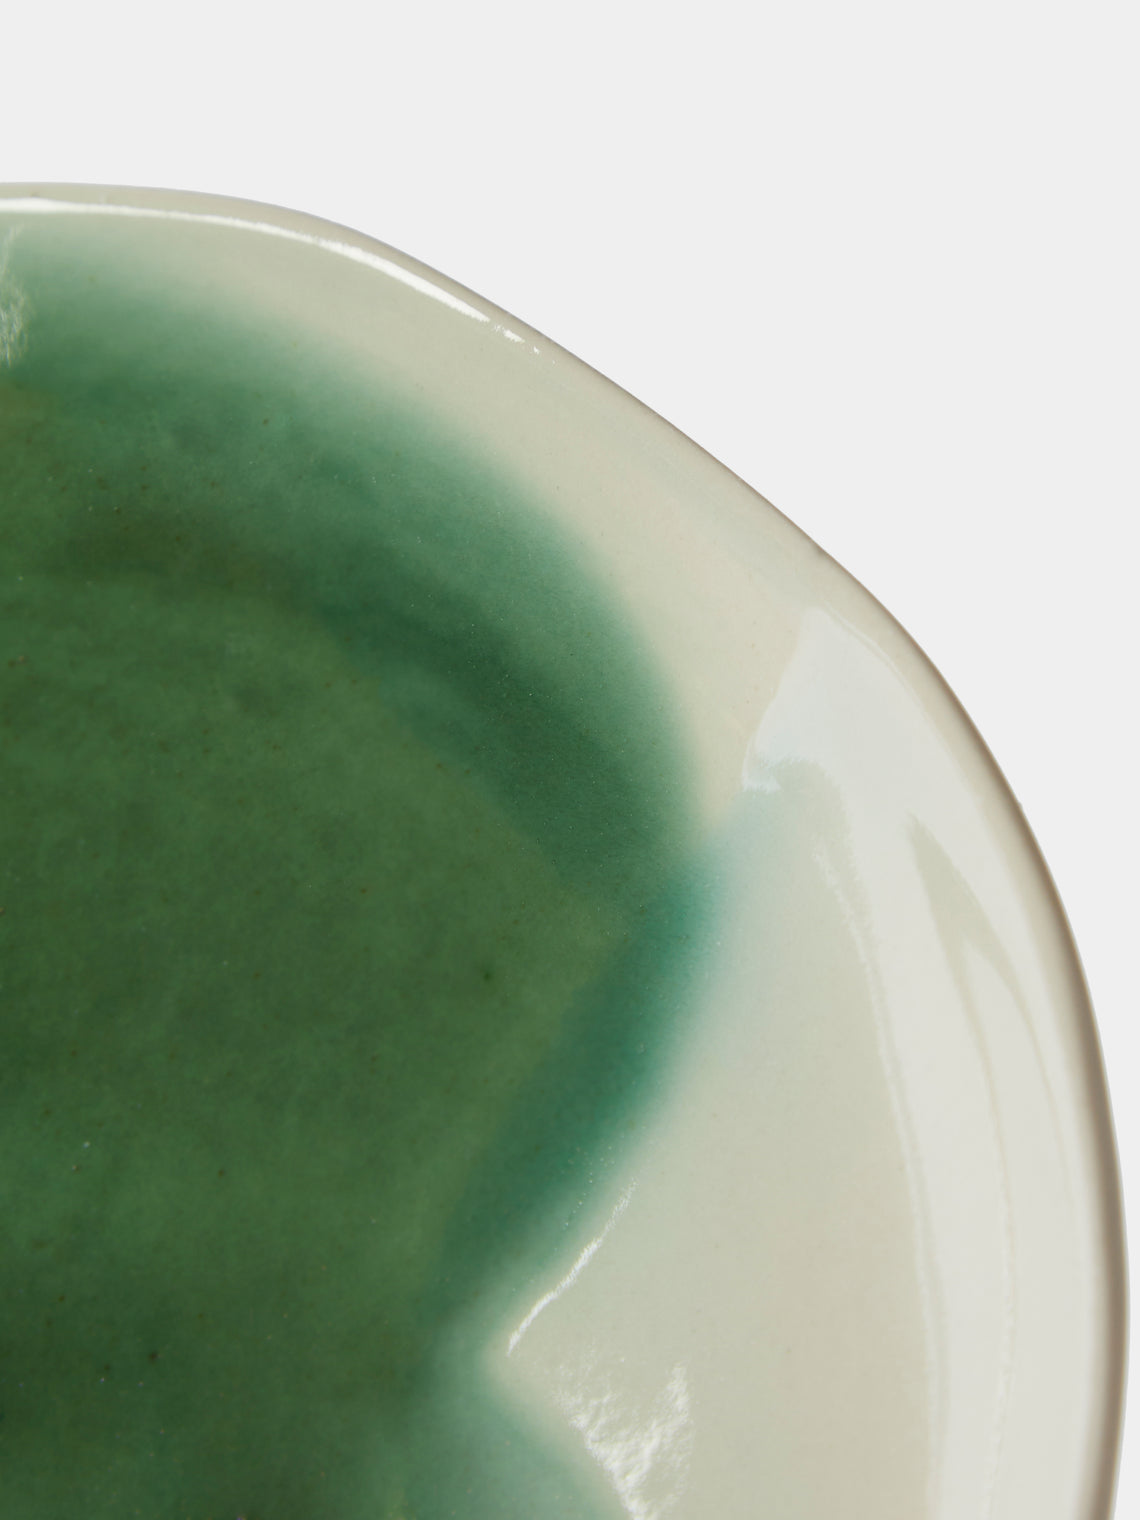 Pottery & Poetry - Hand-Glazed Porcelain Side Plates (Set of 4) - Green - ABASK